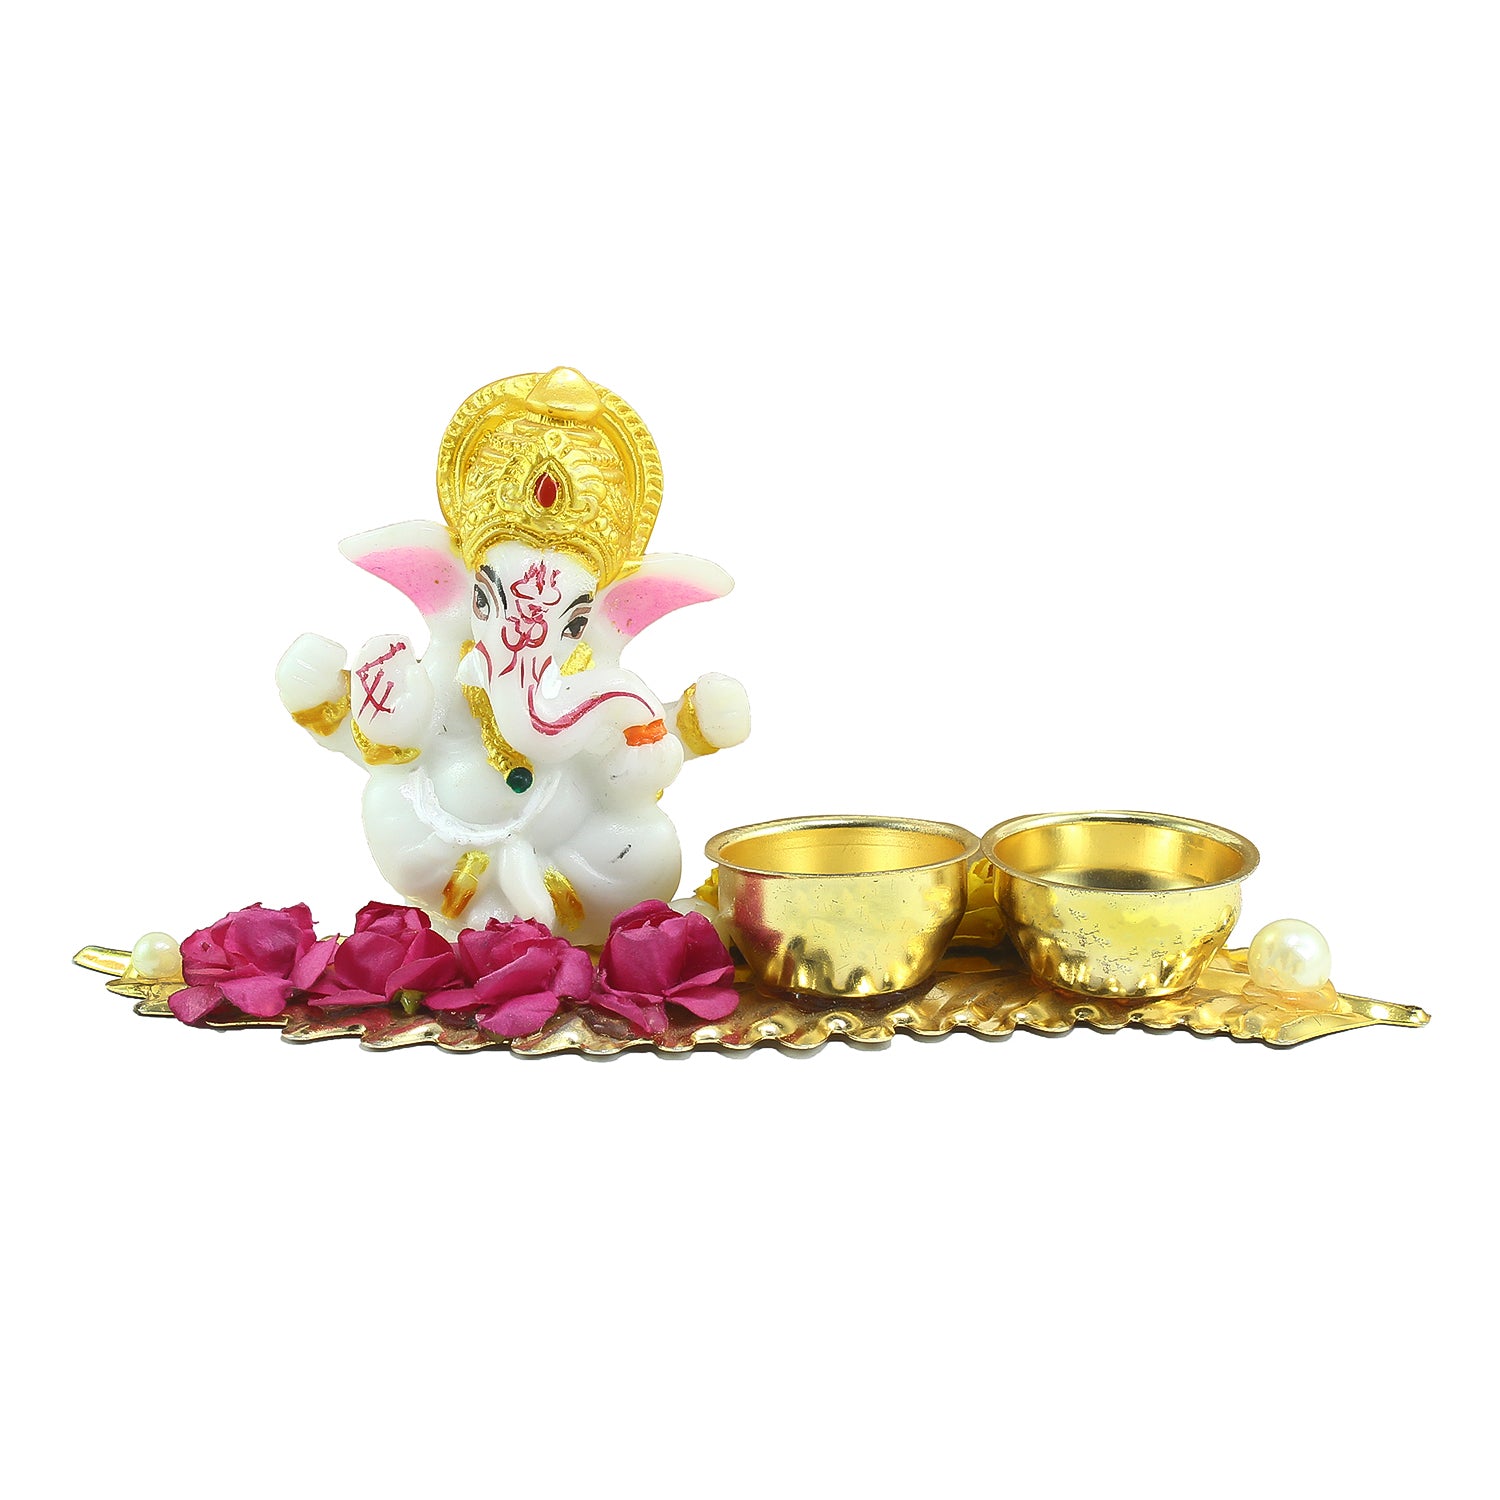 Lord Ganesha Idol On Decorative Haldi Kumkum Holder For Auspicious Offerings 3